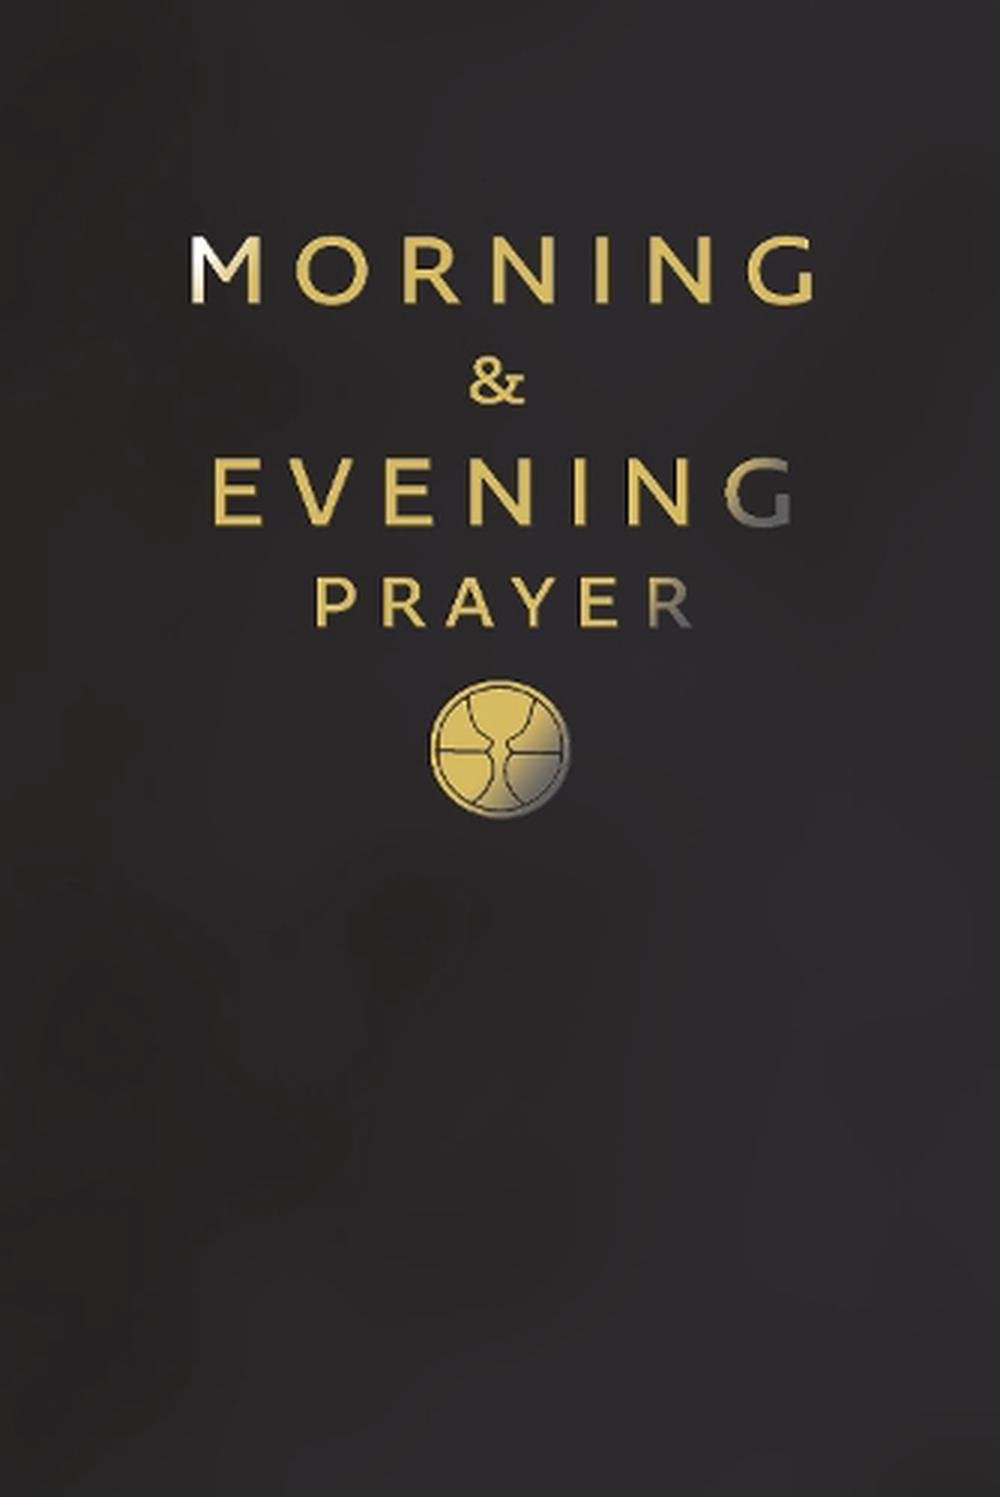 divine office morning prayer today